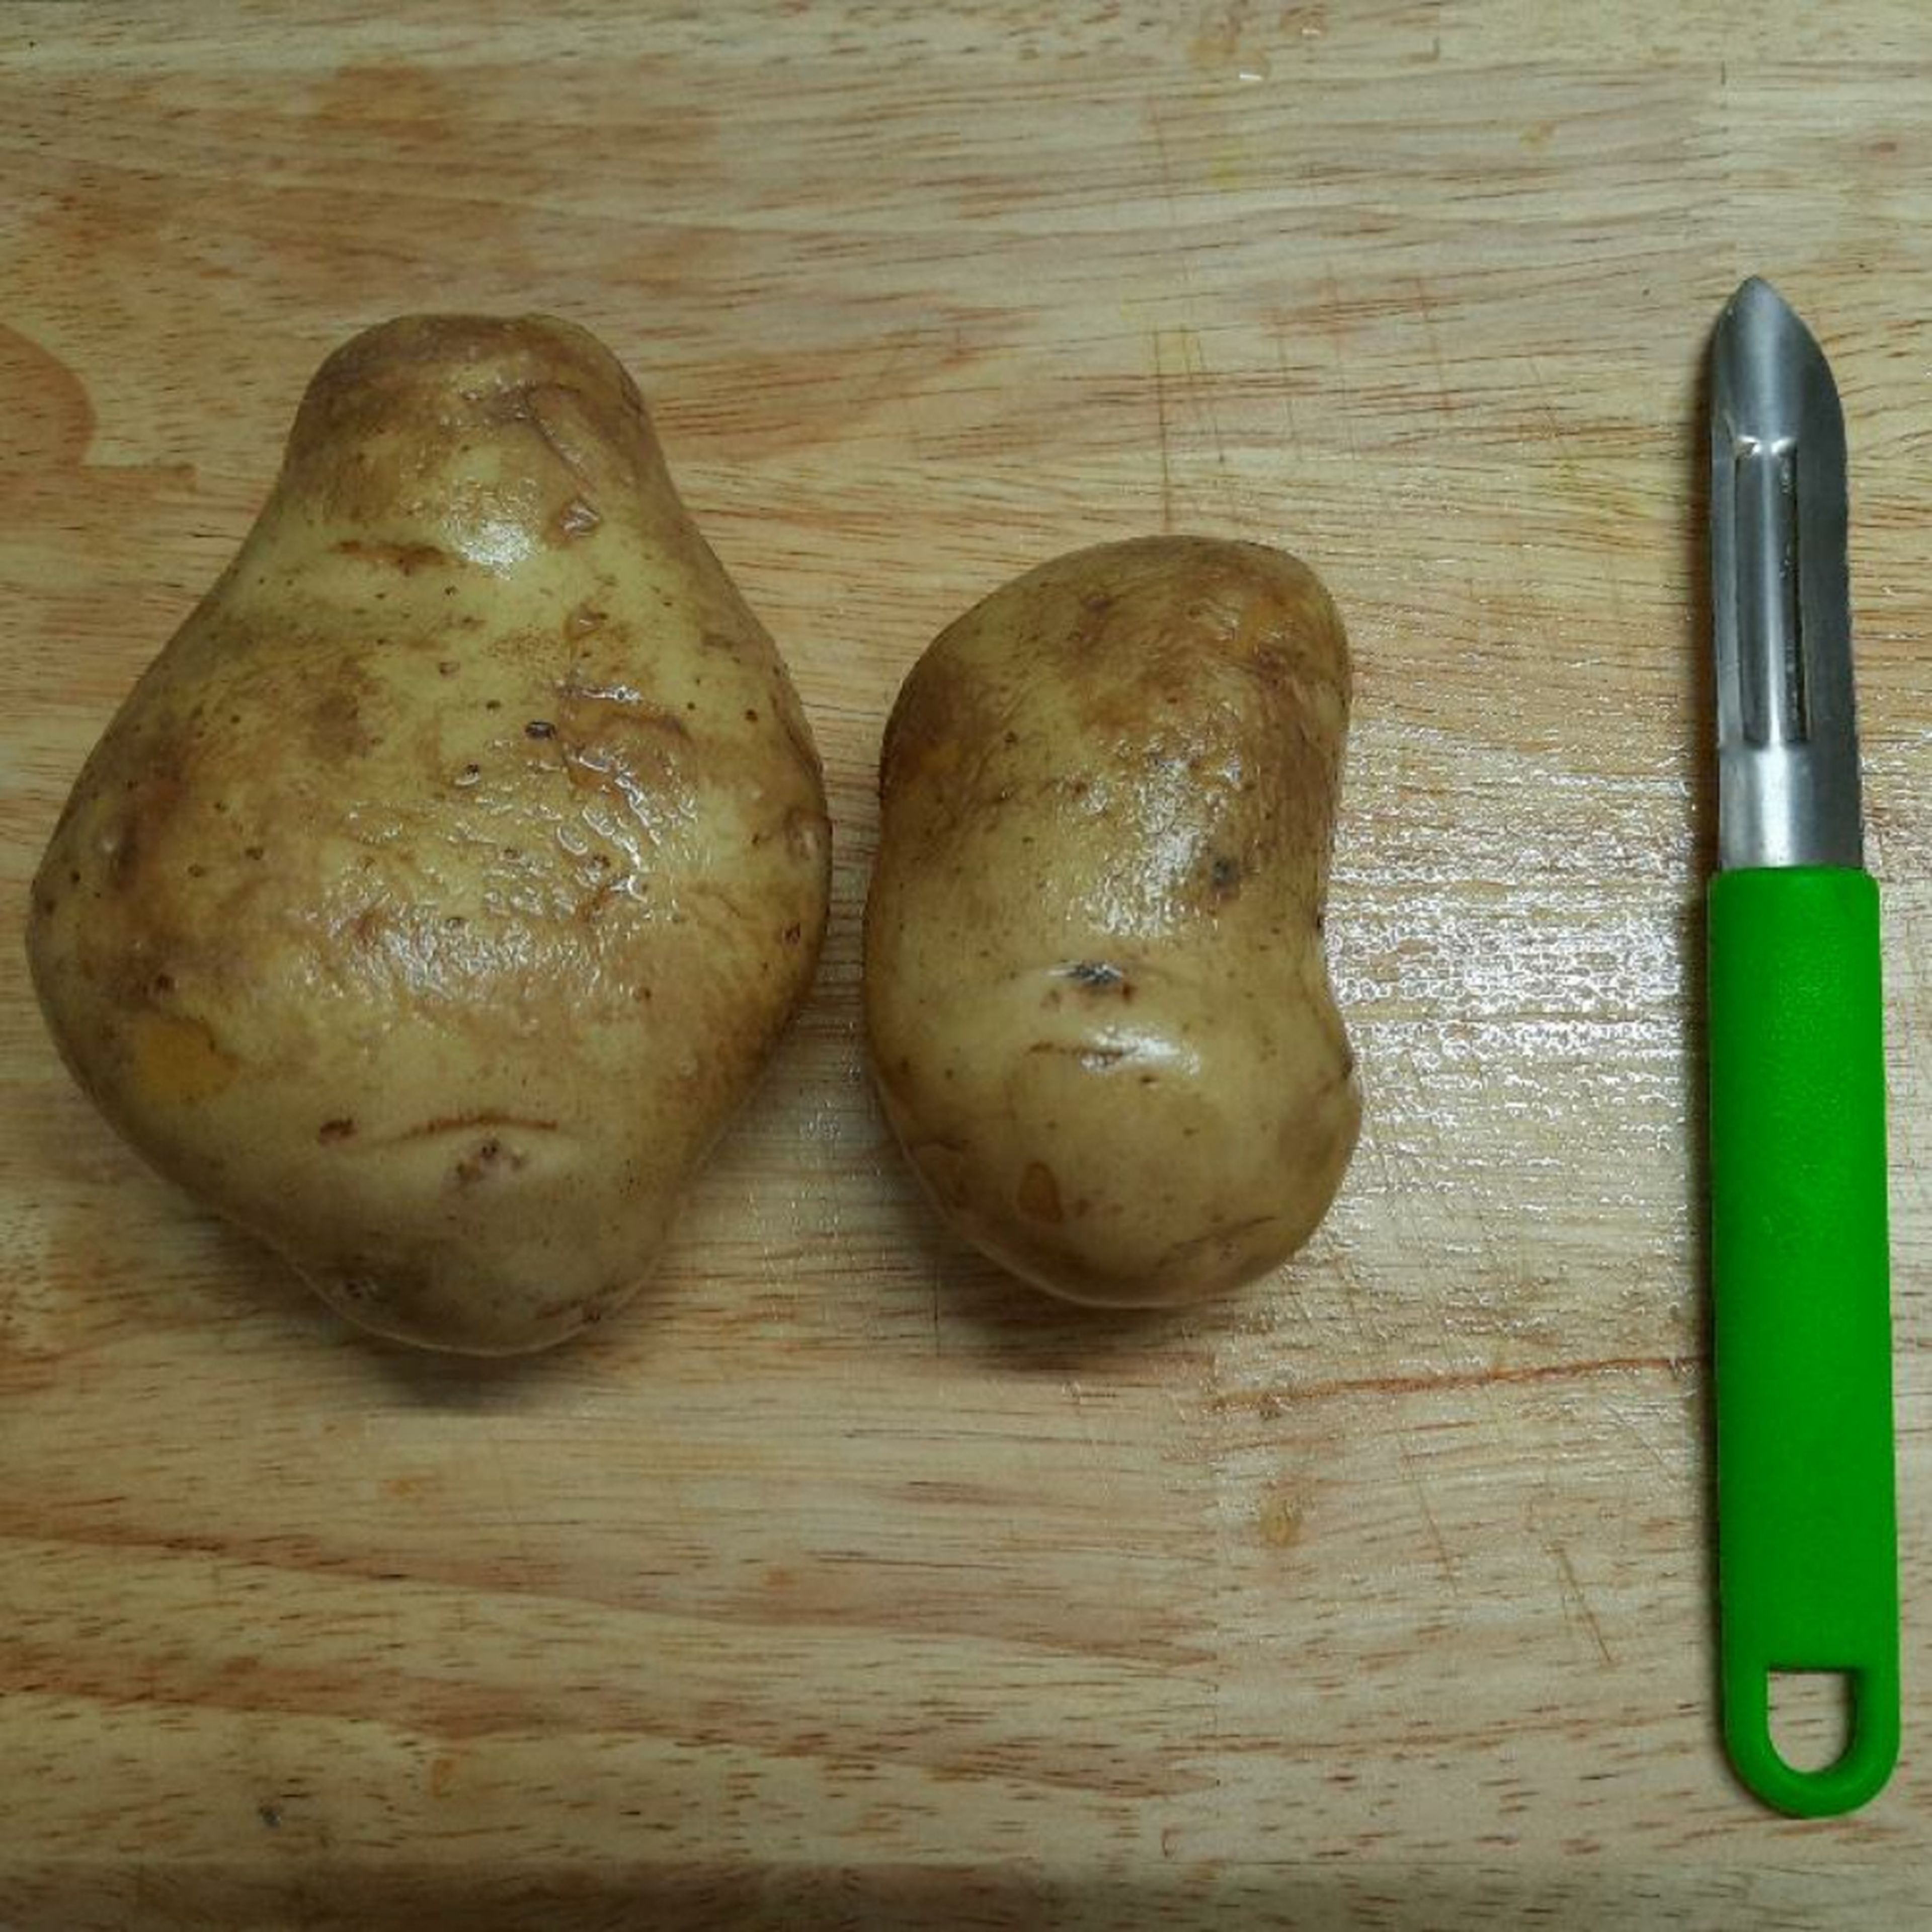 Take 2 medium sized potatoes. Wash them properly.